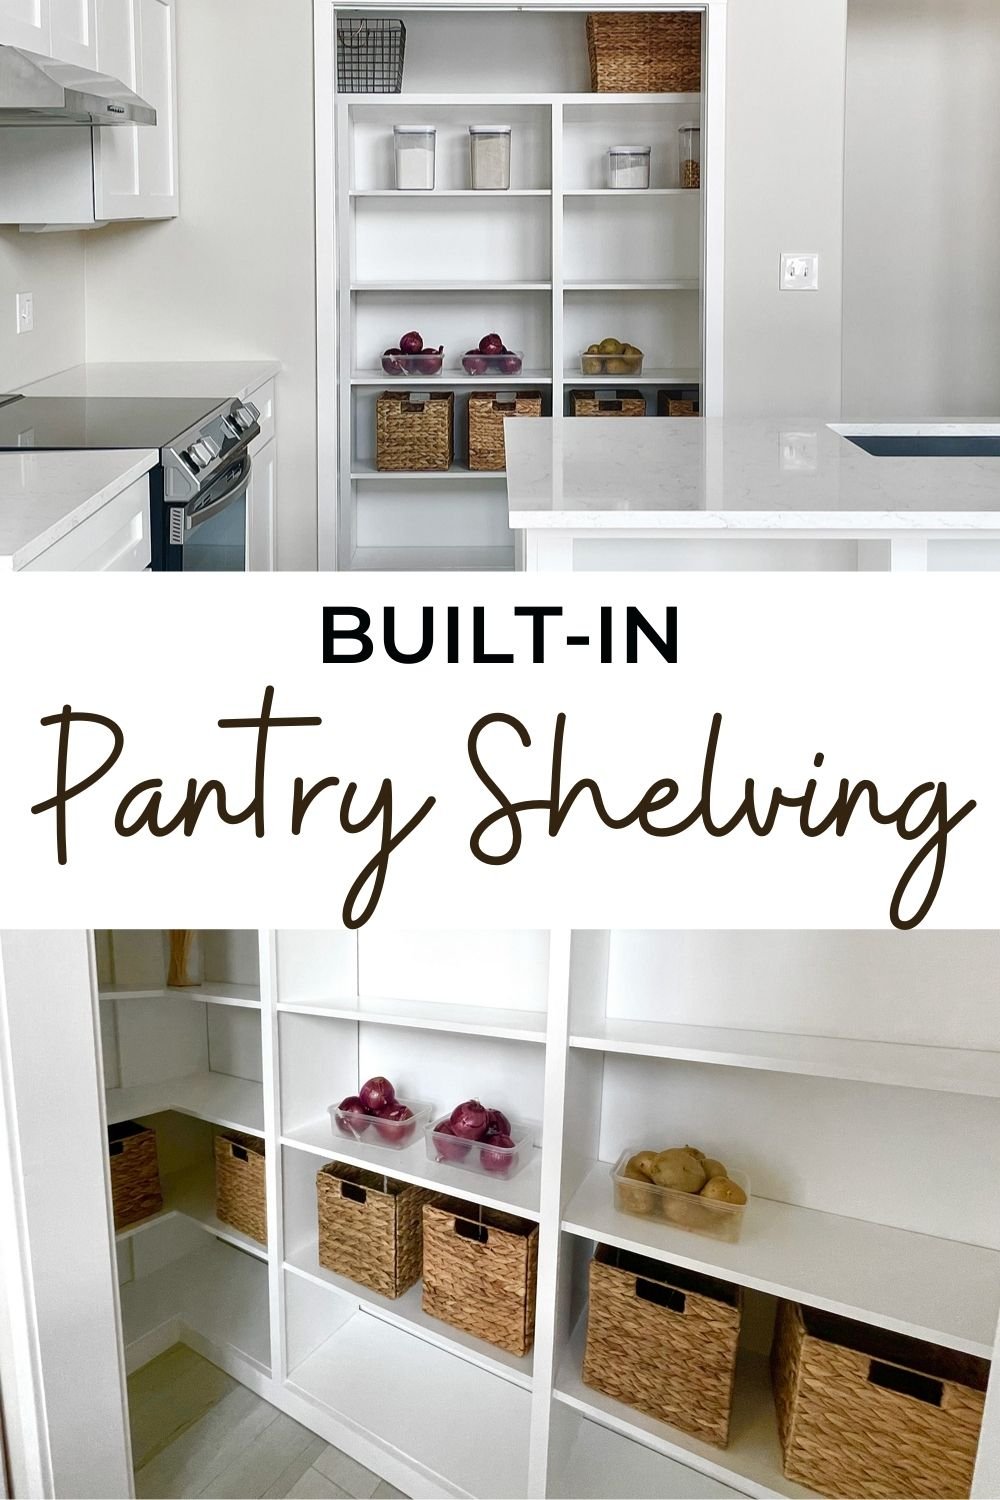 Built-In Pantry Shelving